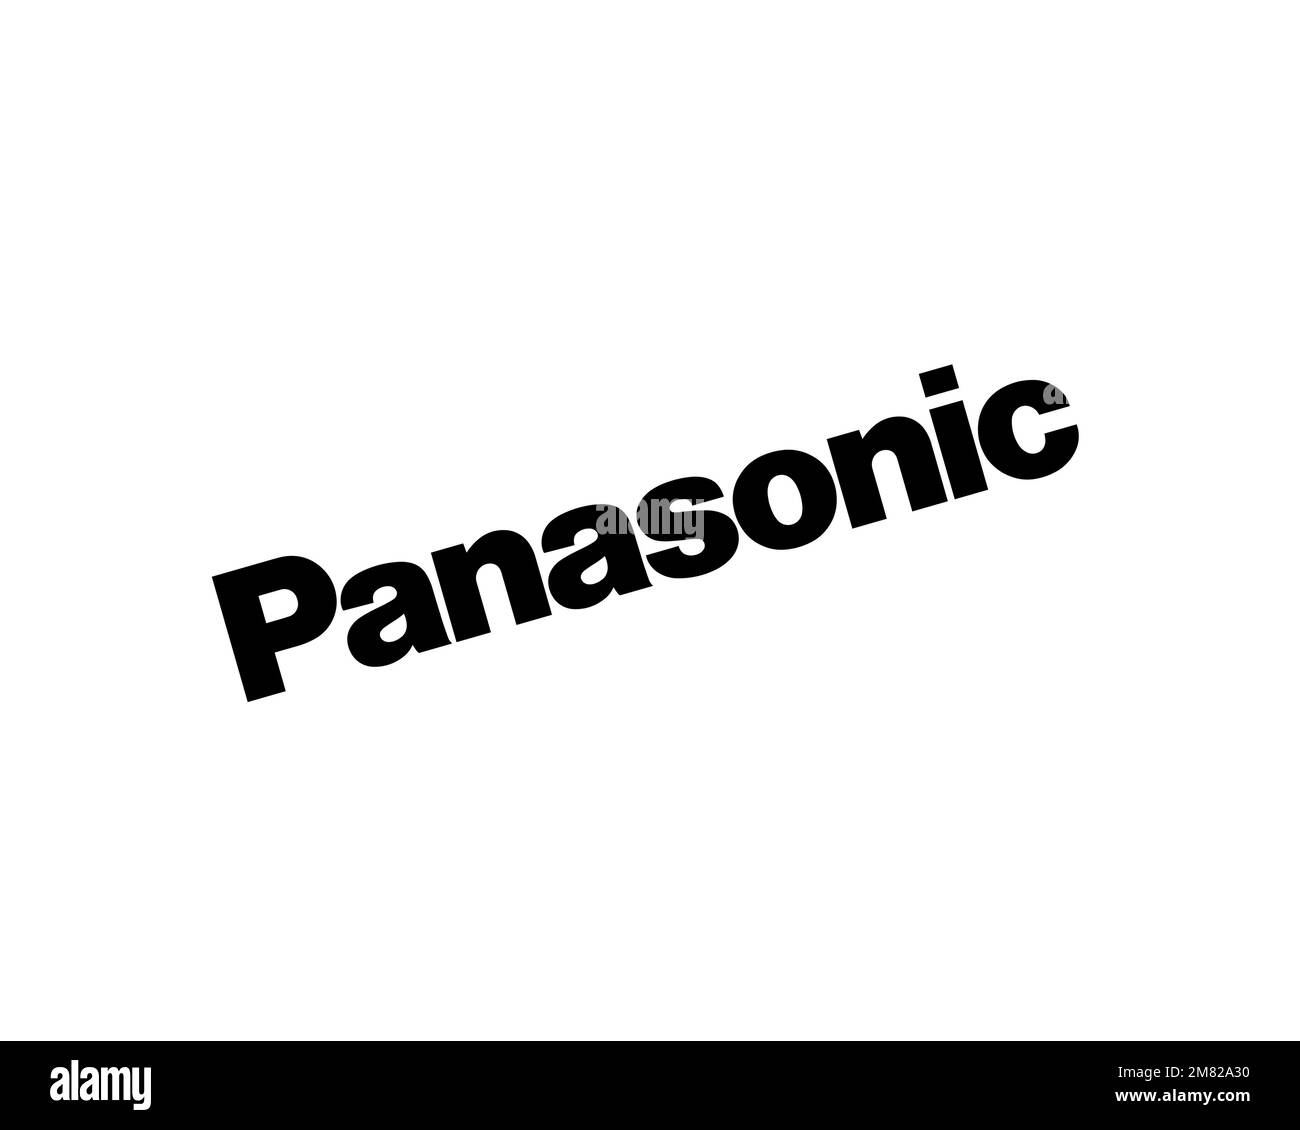 Panasonic, rotated logo, white background Stock Photo